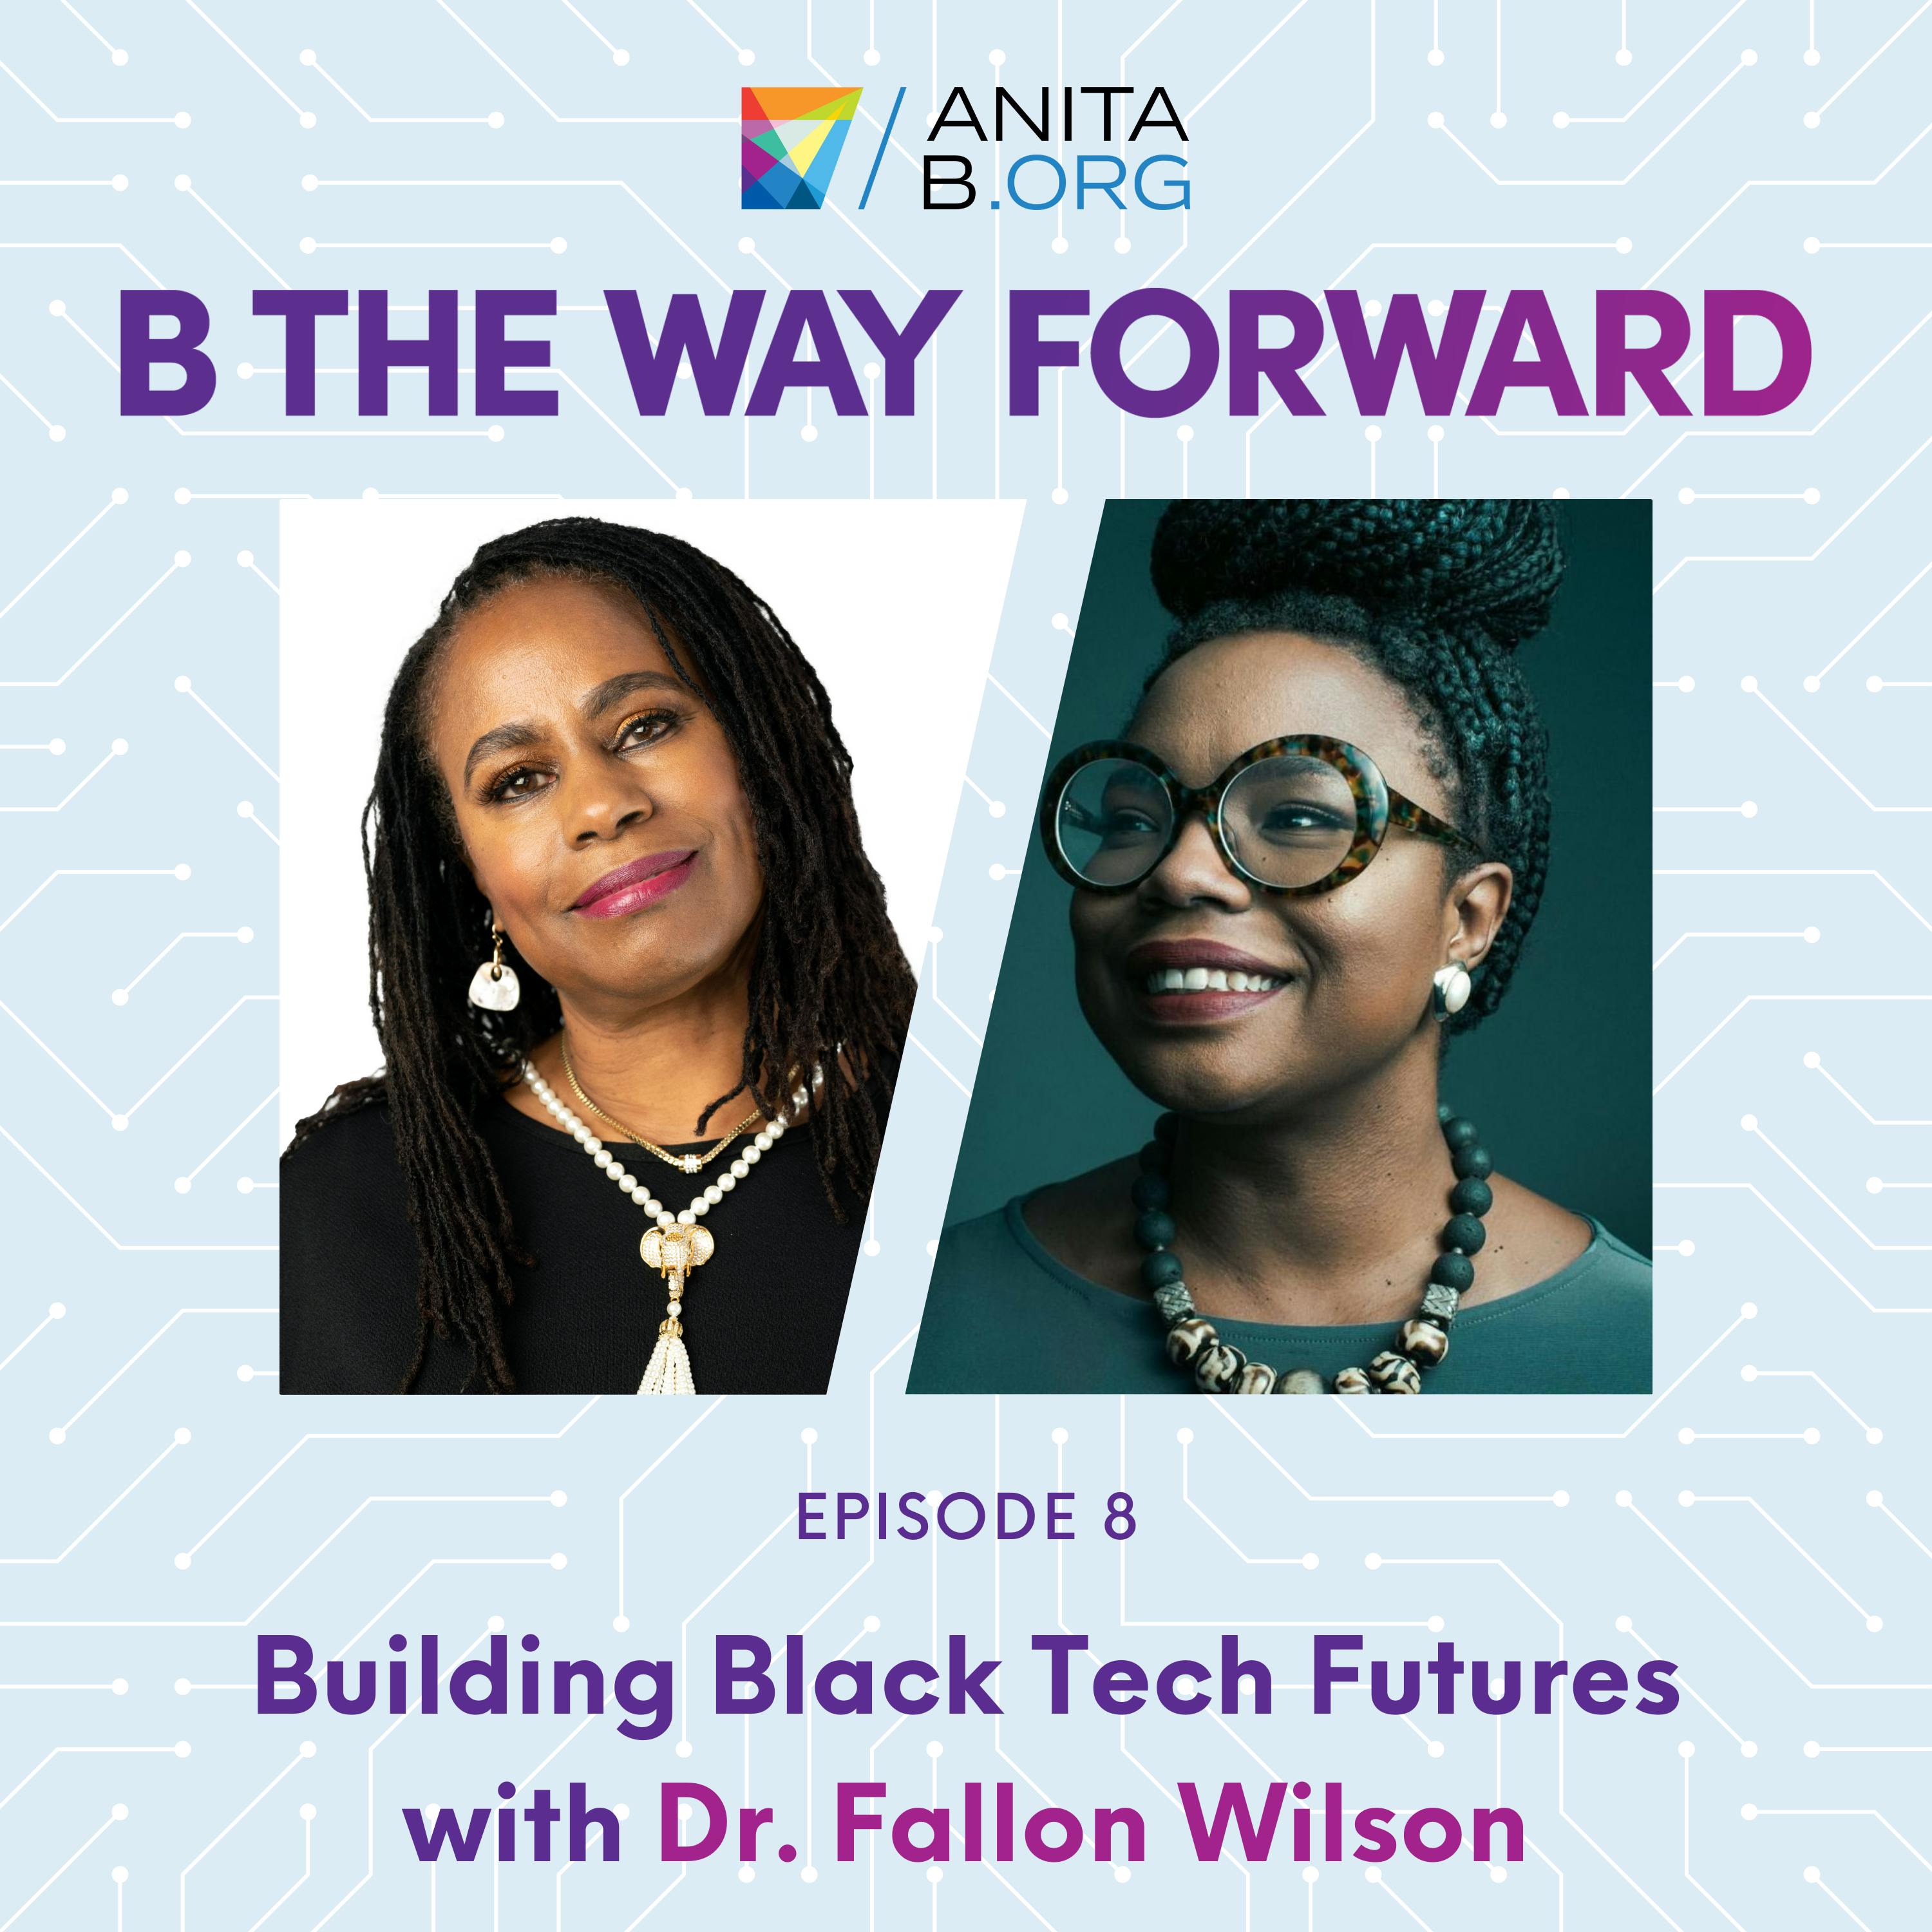 Building Black Tech Futures with Dr. Fallon Wilson